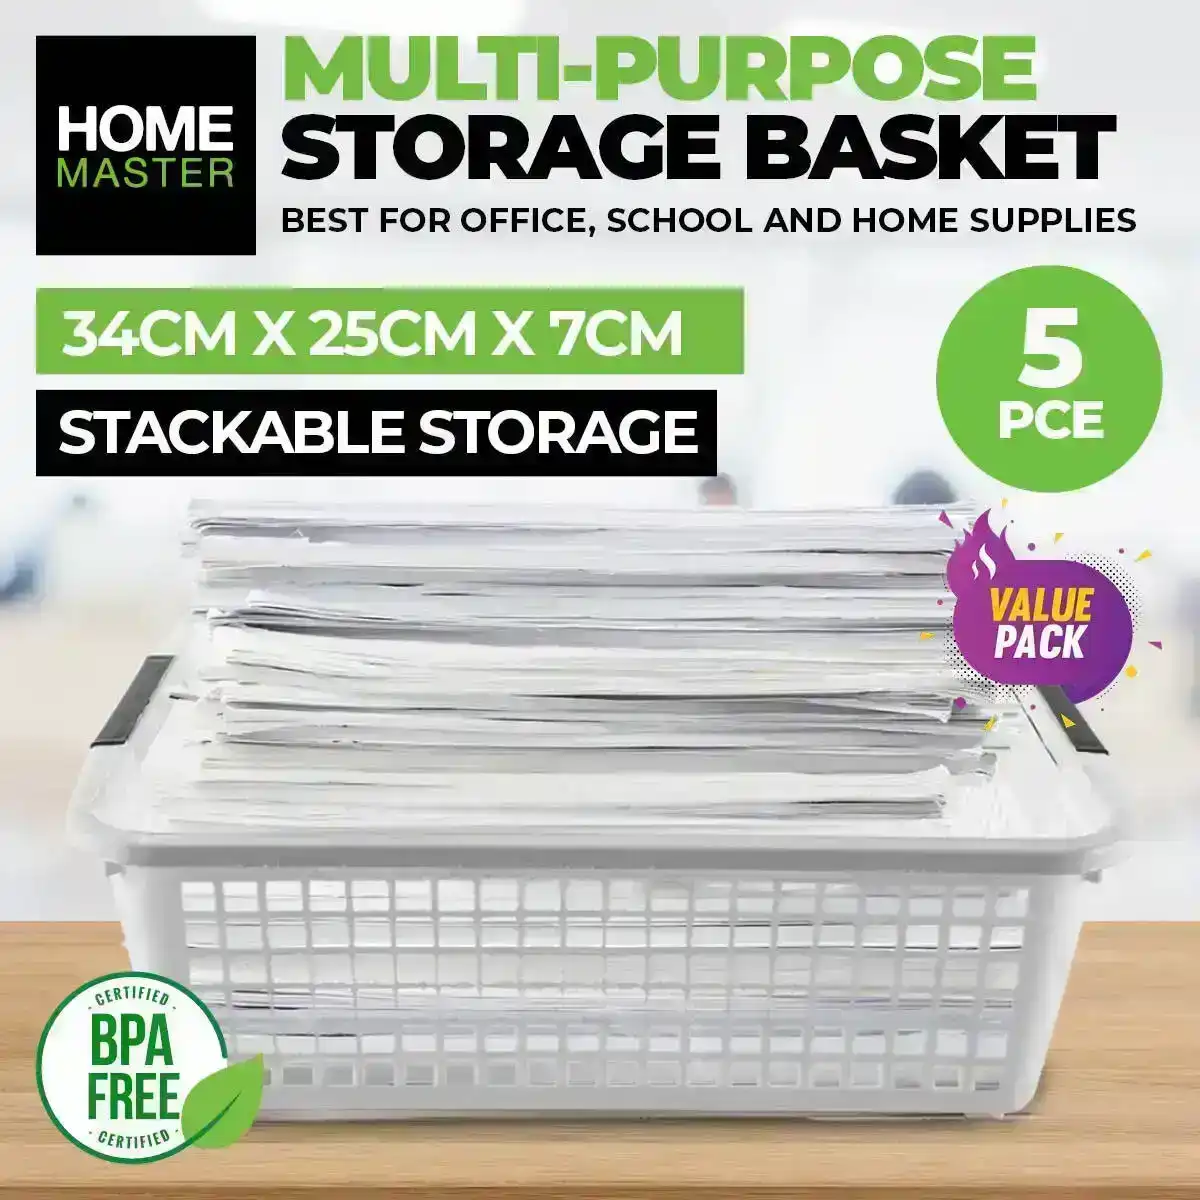 Home Master® 5PCE Storage Baskets Multi Purpose Space Saving 25 x 34 x 7cm